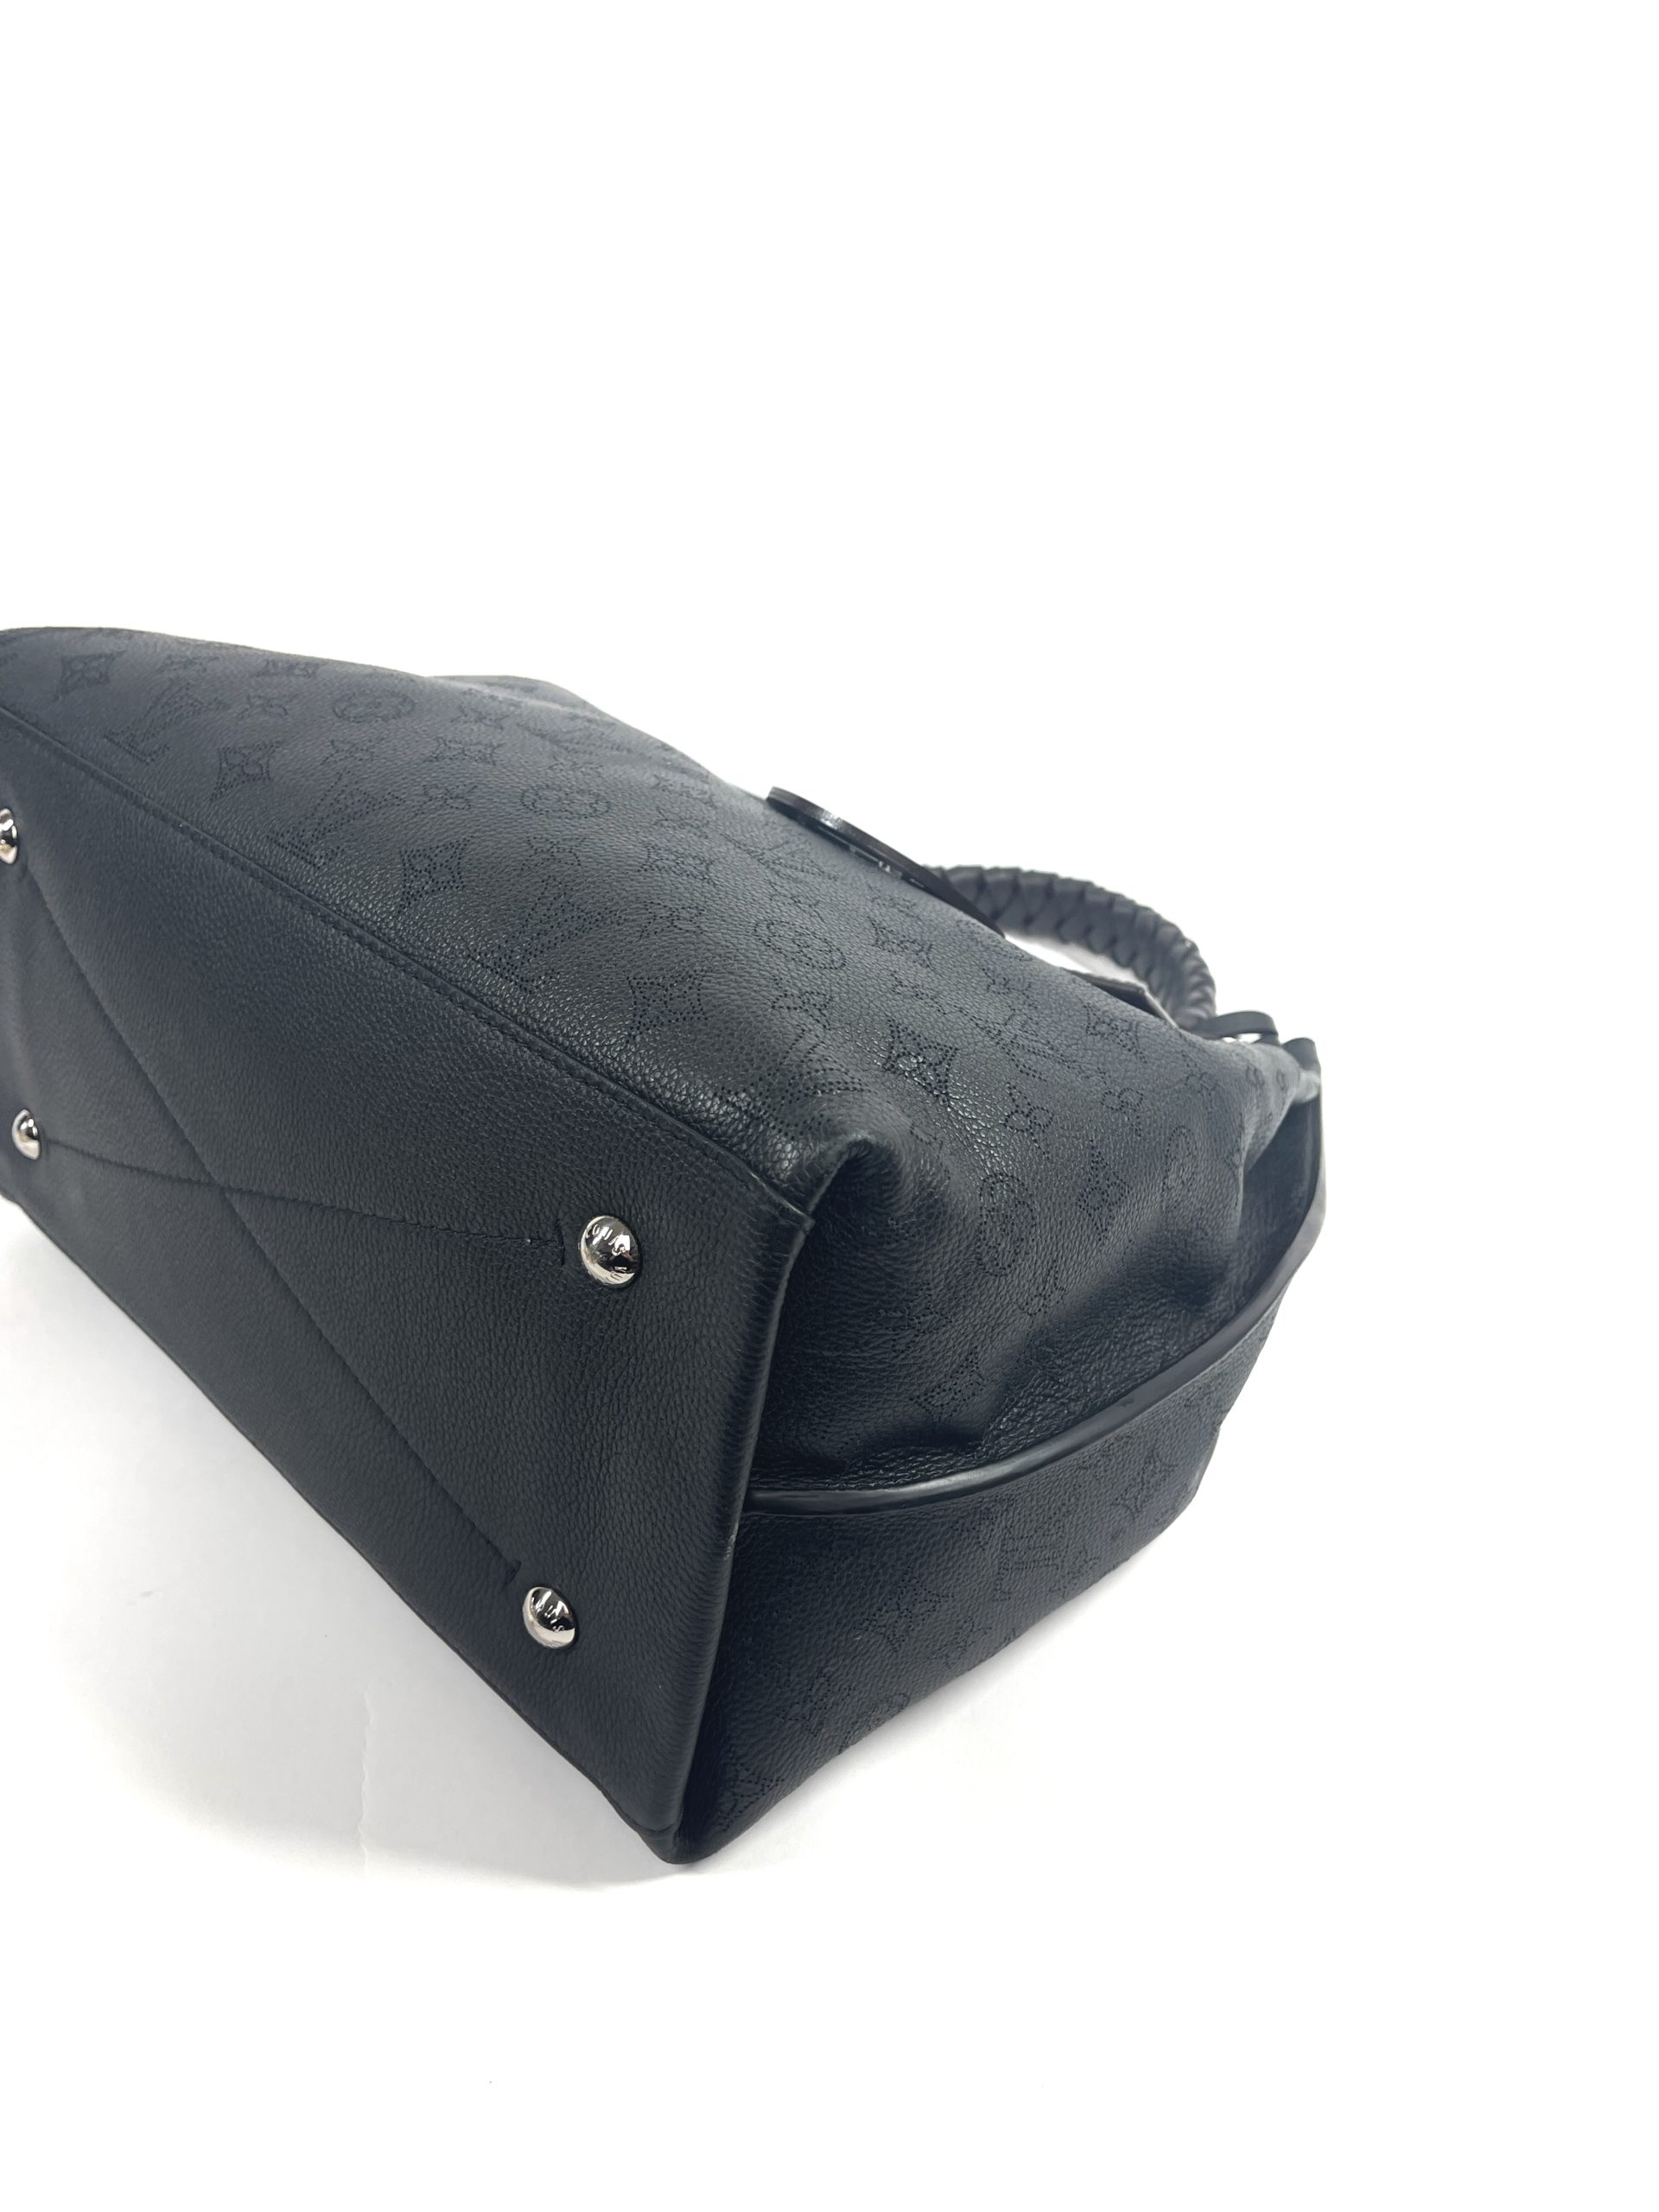 Louis+Vuitton+Carmel+Hobo+Bag+Black+Leather for sale online